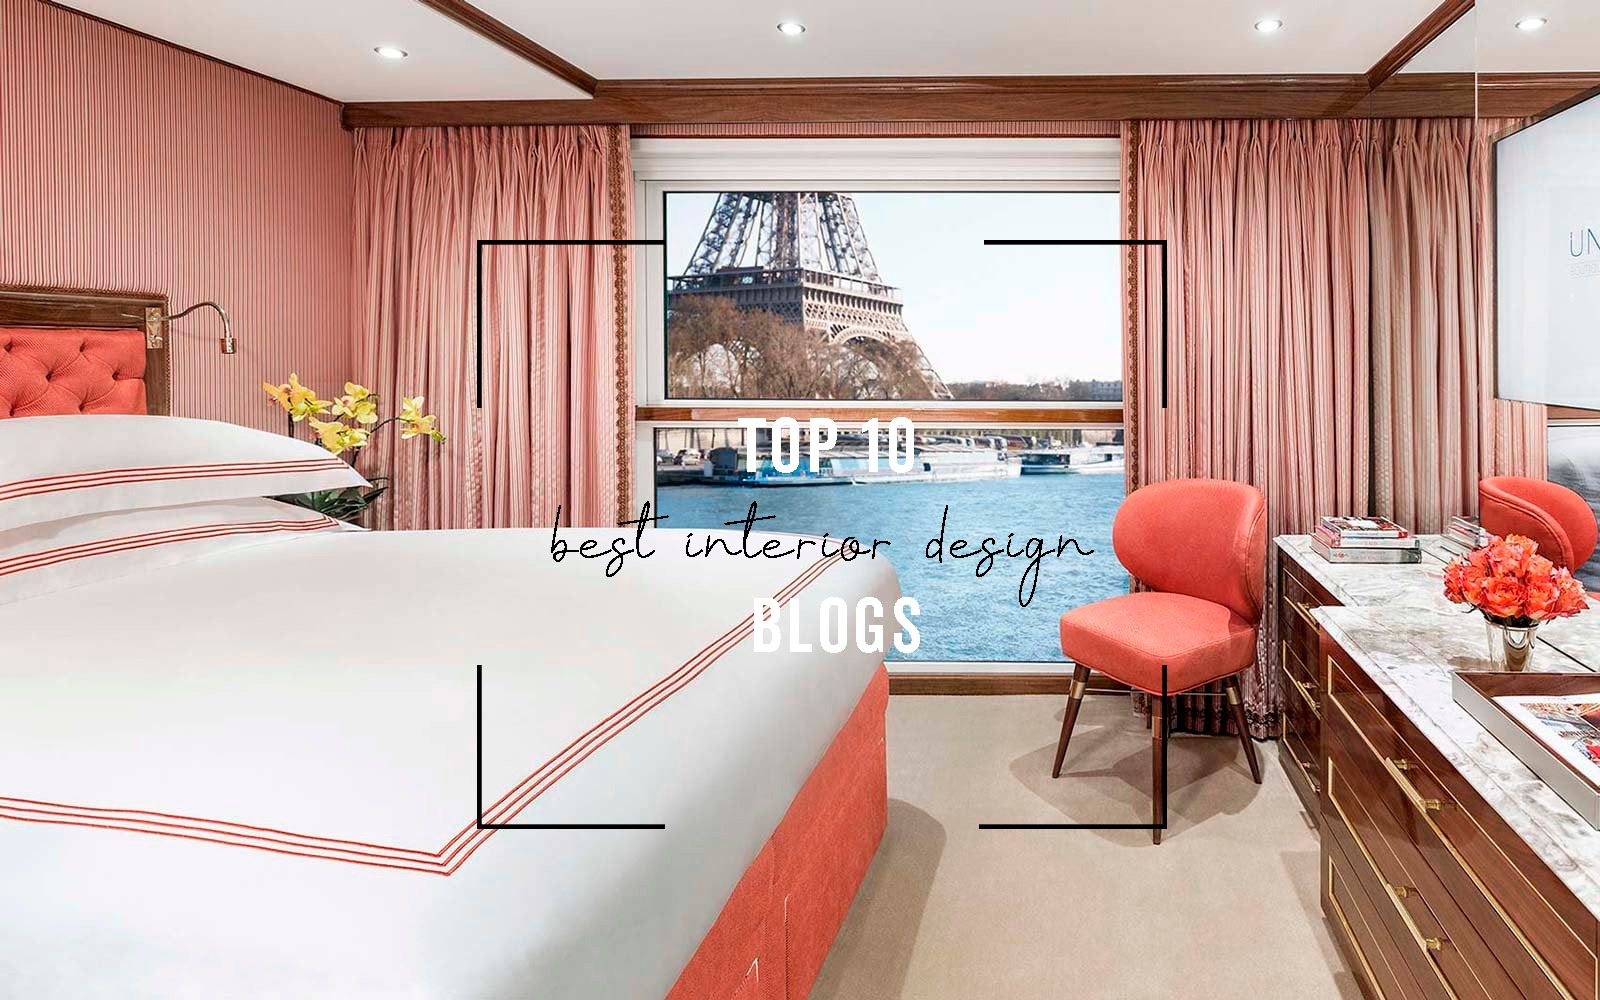 Top 10 Best Interior Design Blogs